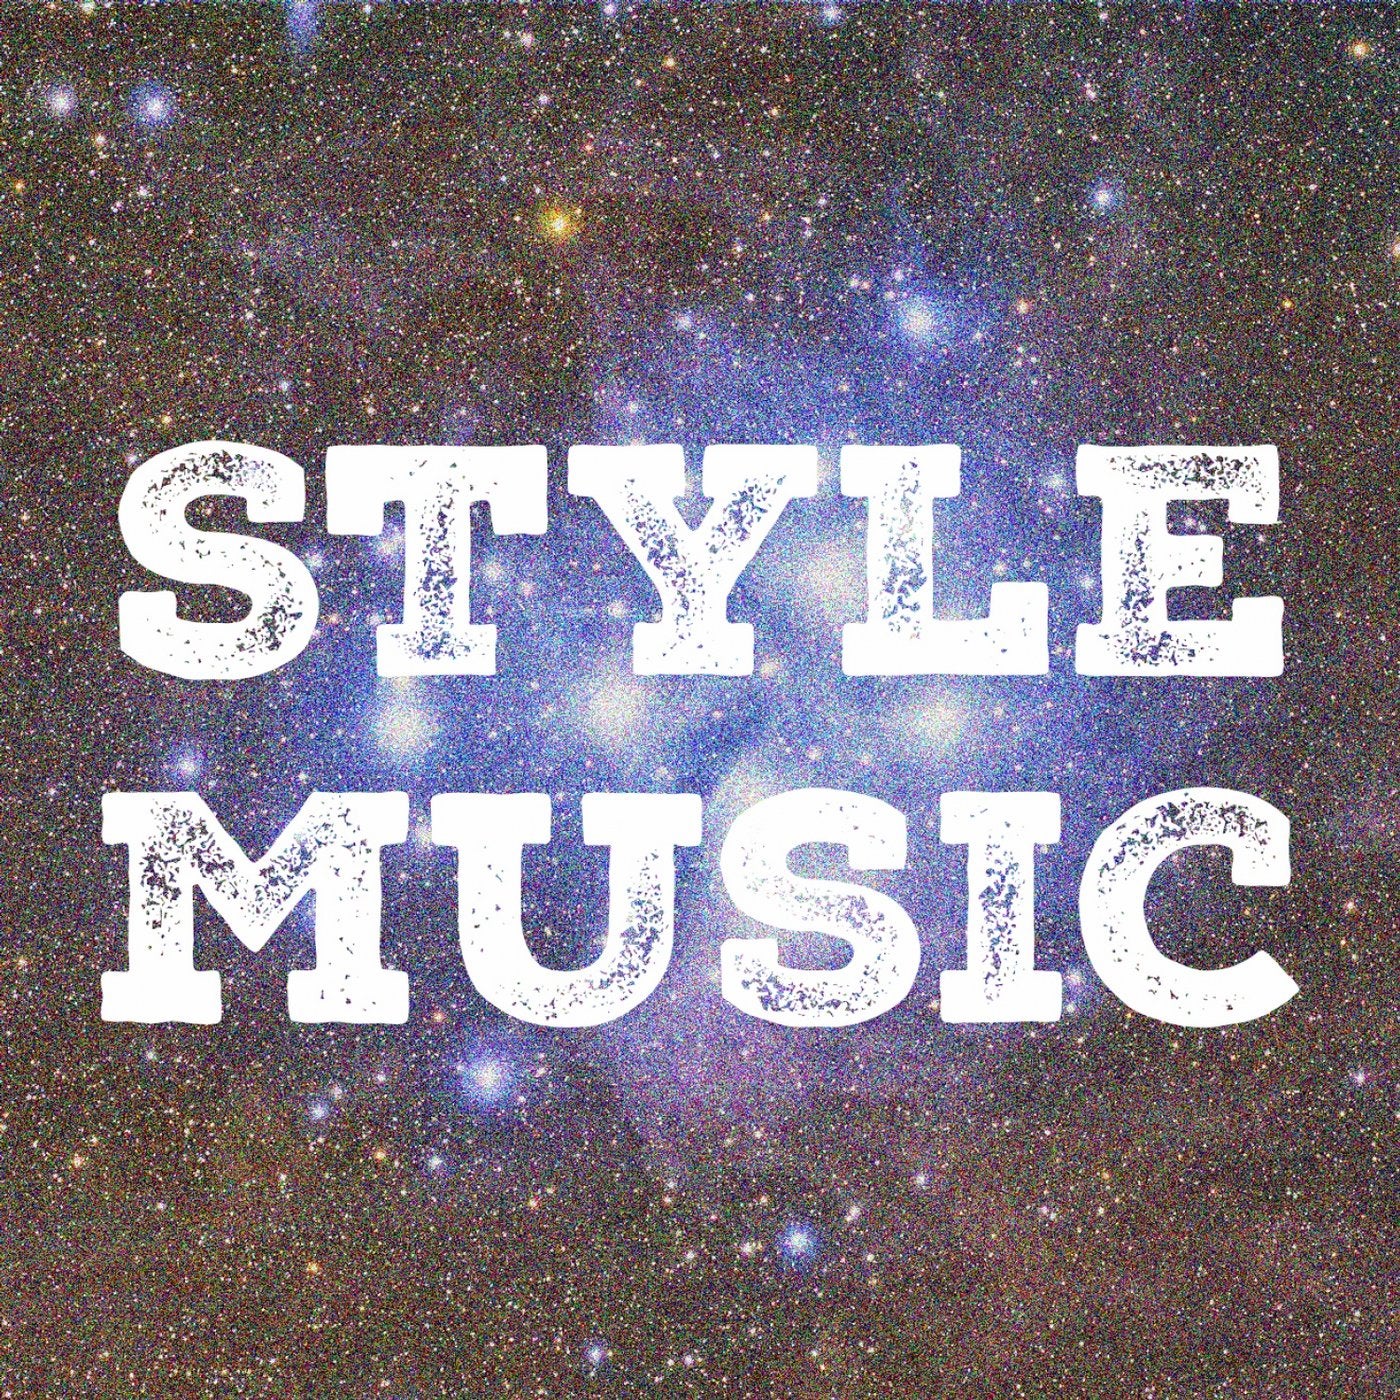 Style Music